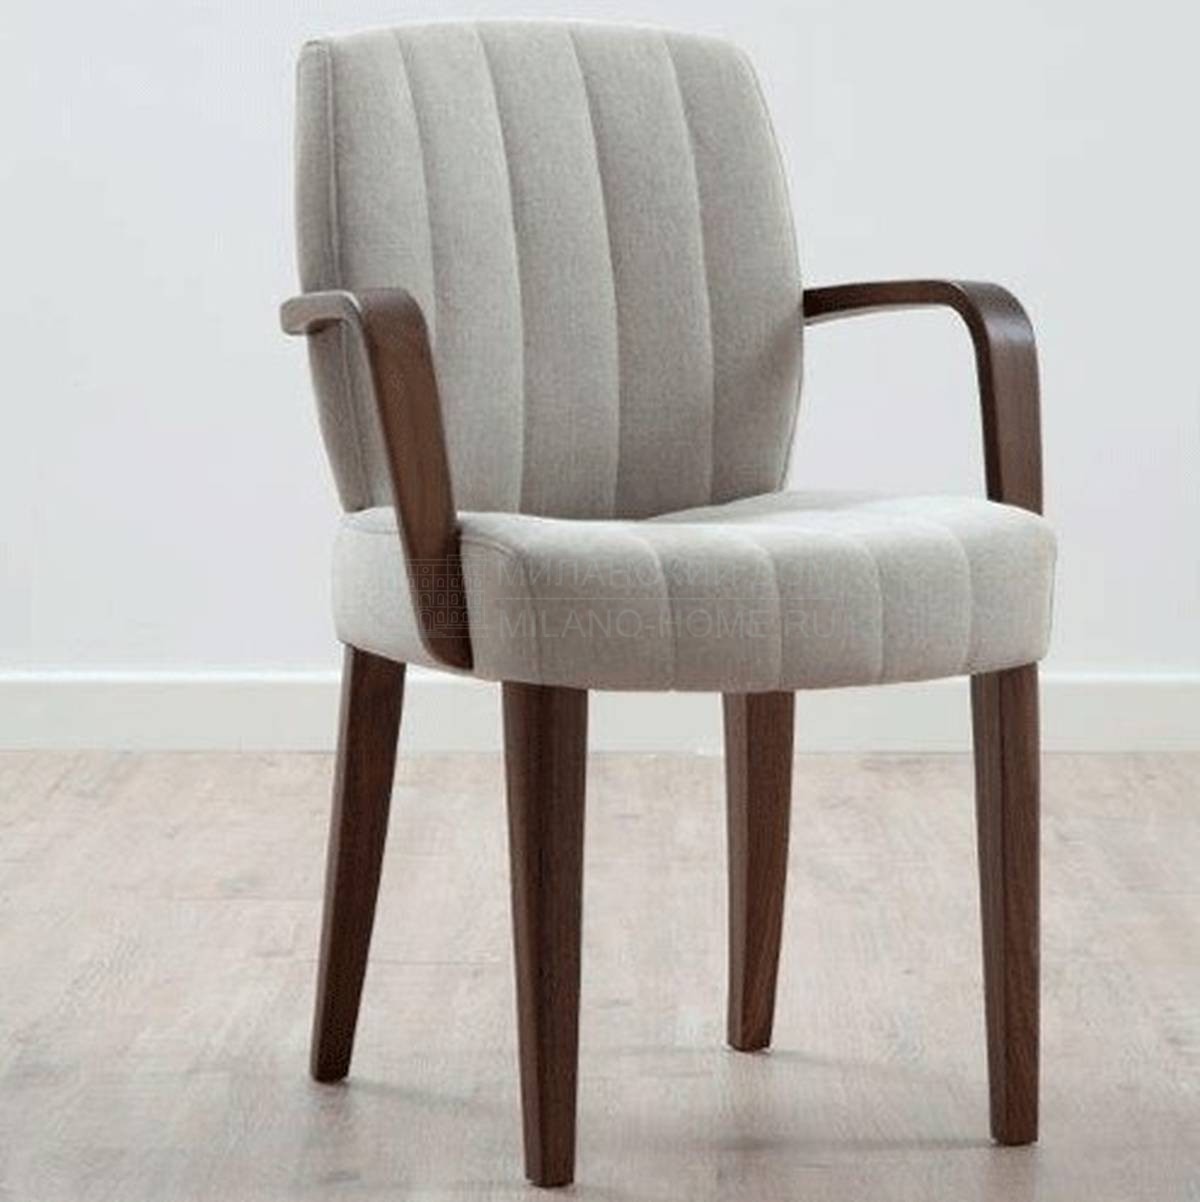 Полукресло Gallant arm chair из Италии фабрики TONON